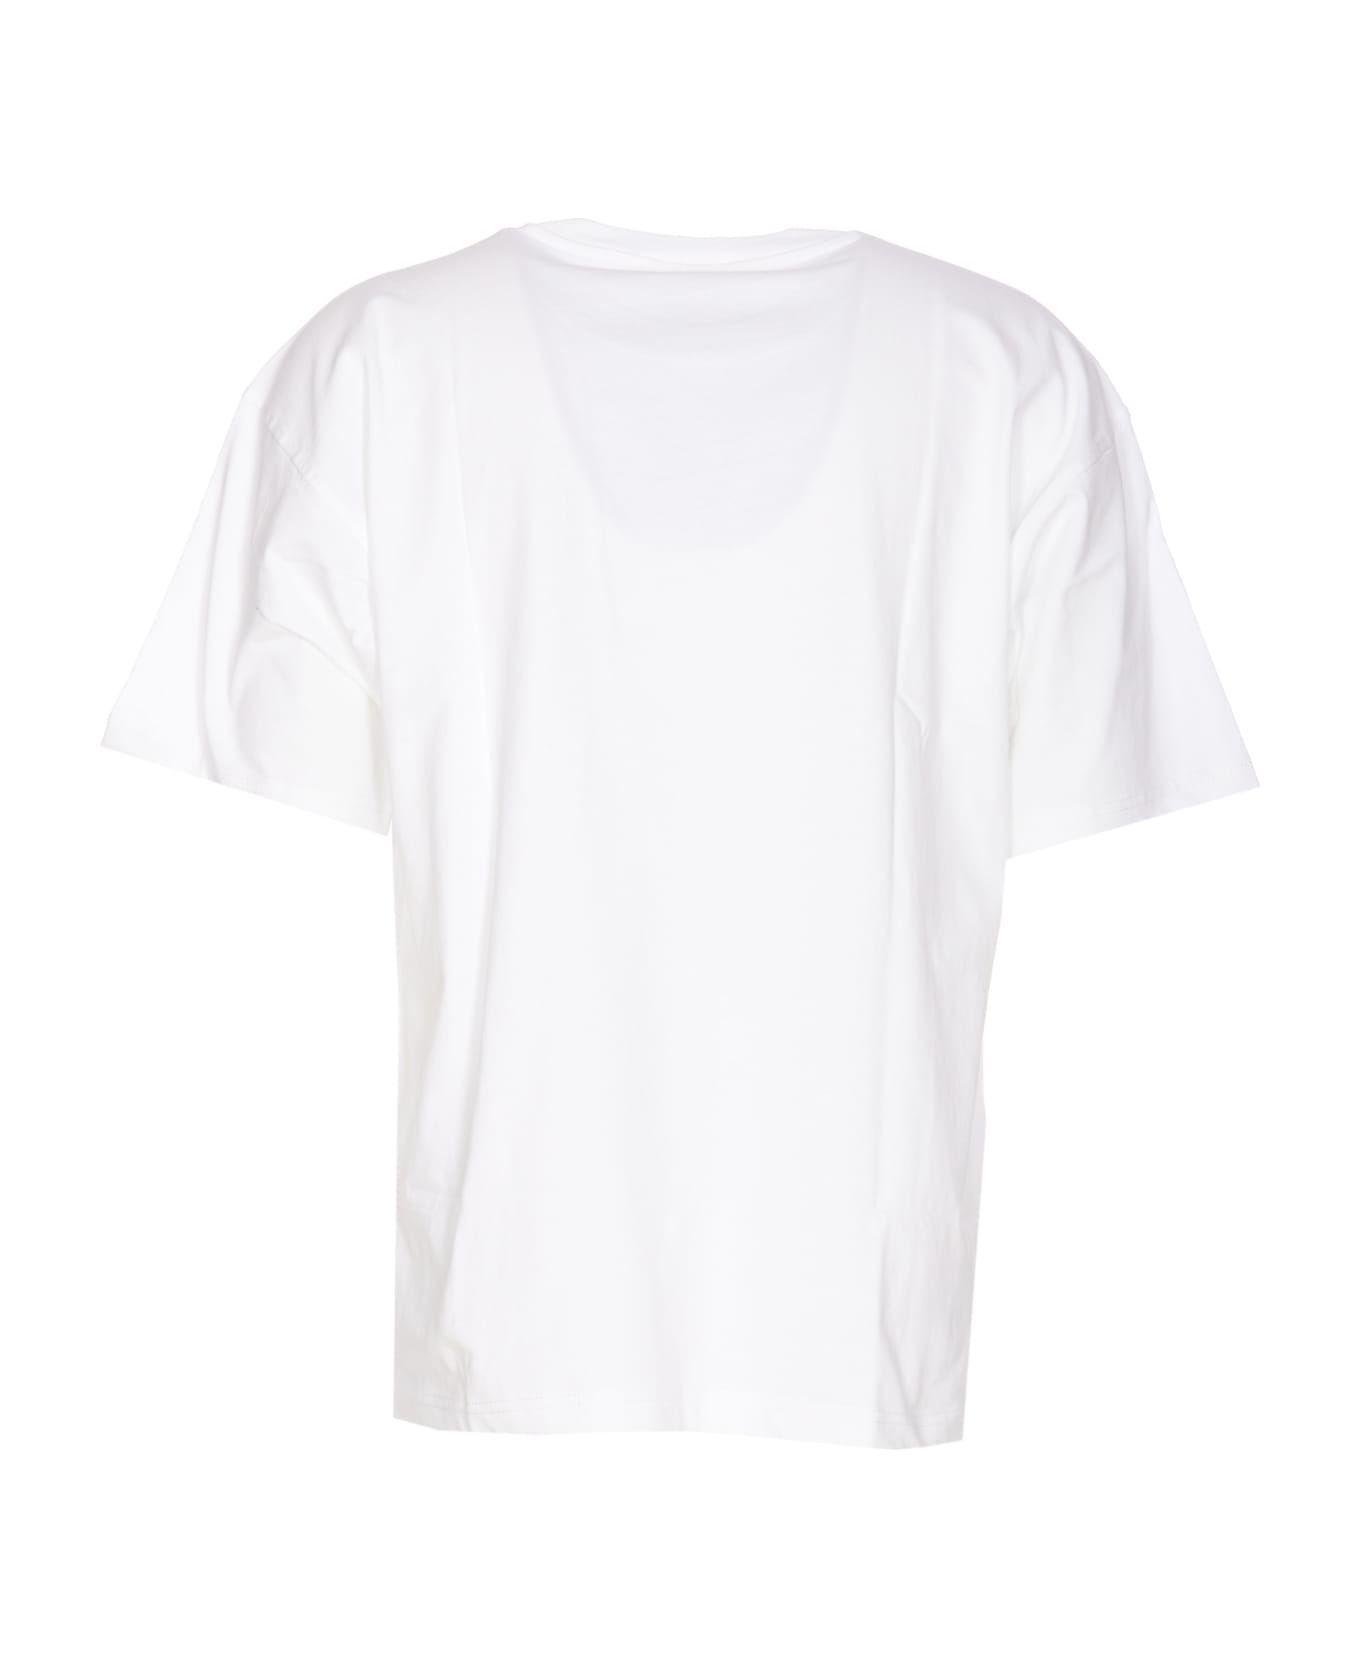 Diesel T-nlabel L1 T-shirt - White